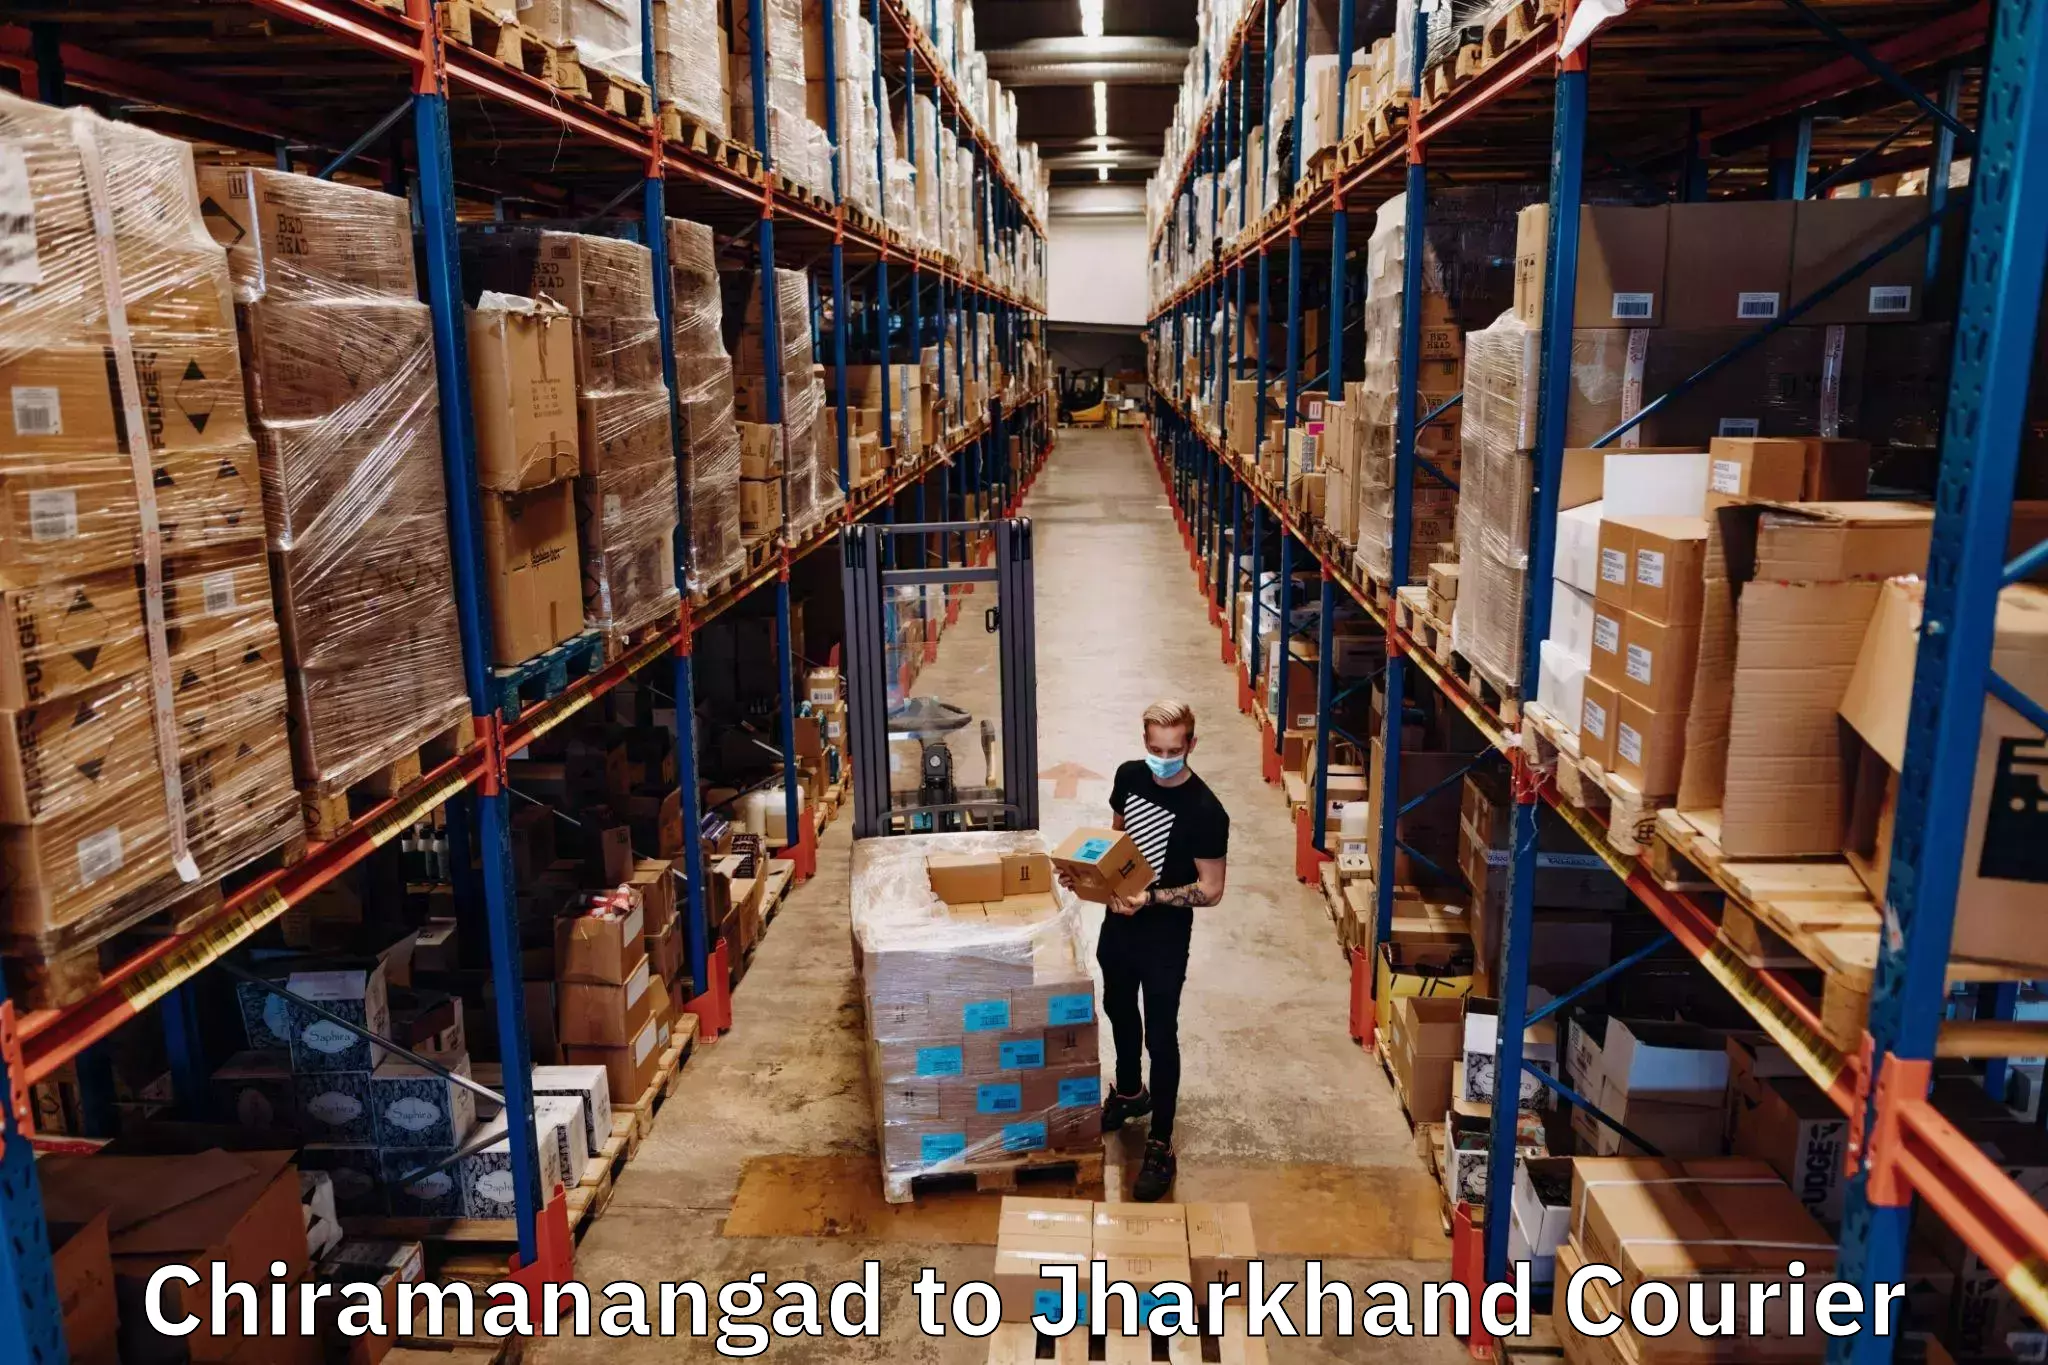 Global shipping networks Chiramanangad to Jharkhand